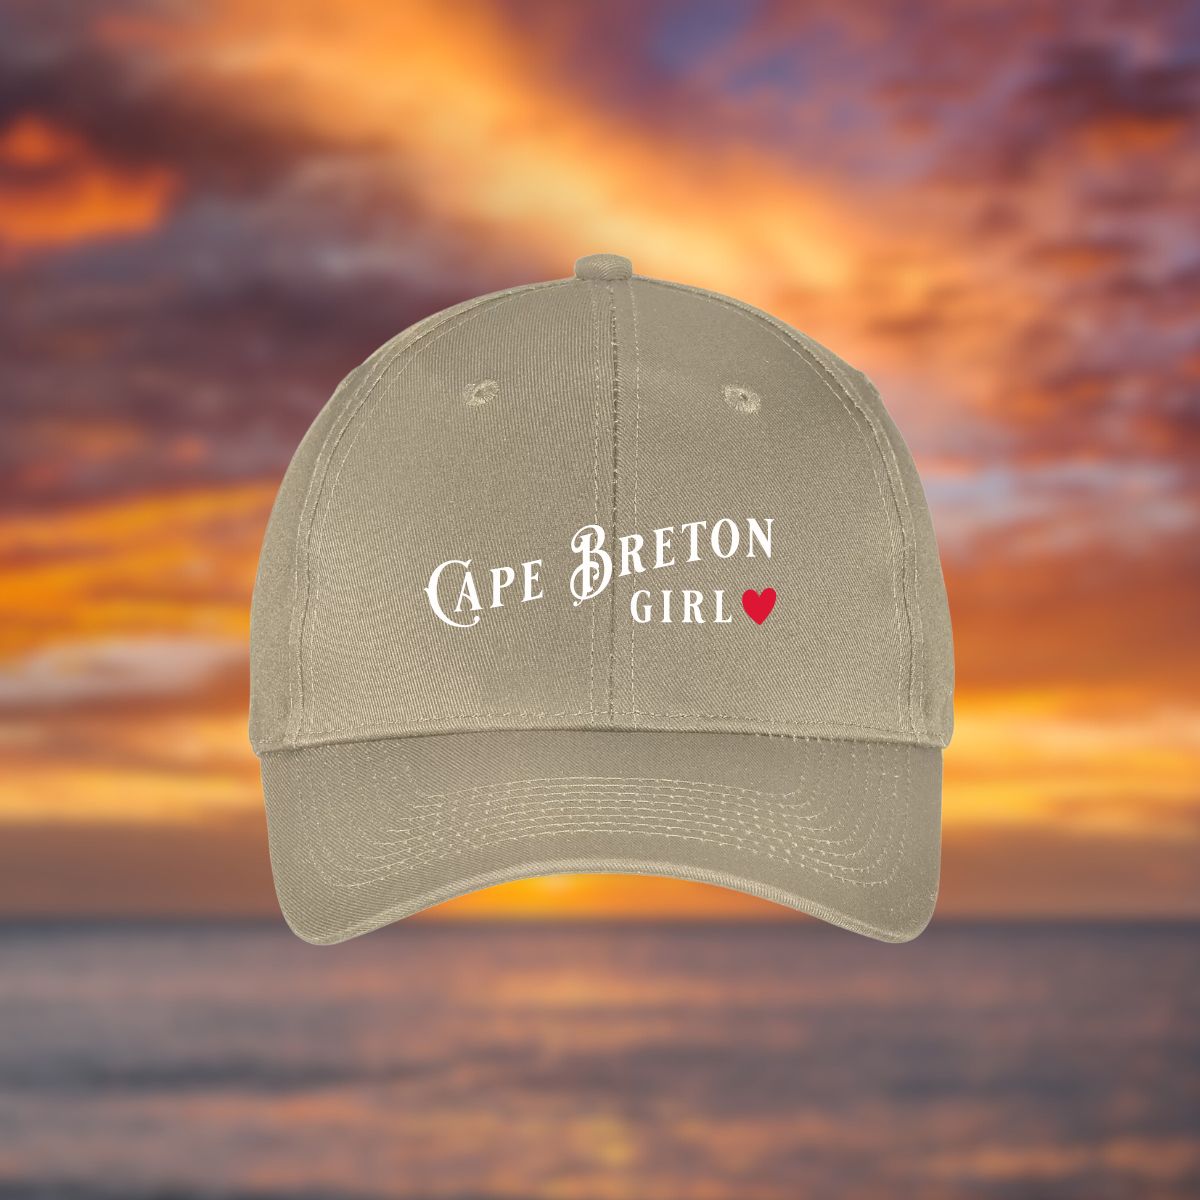 Cape Breton Girl Hat